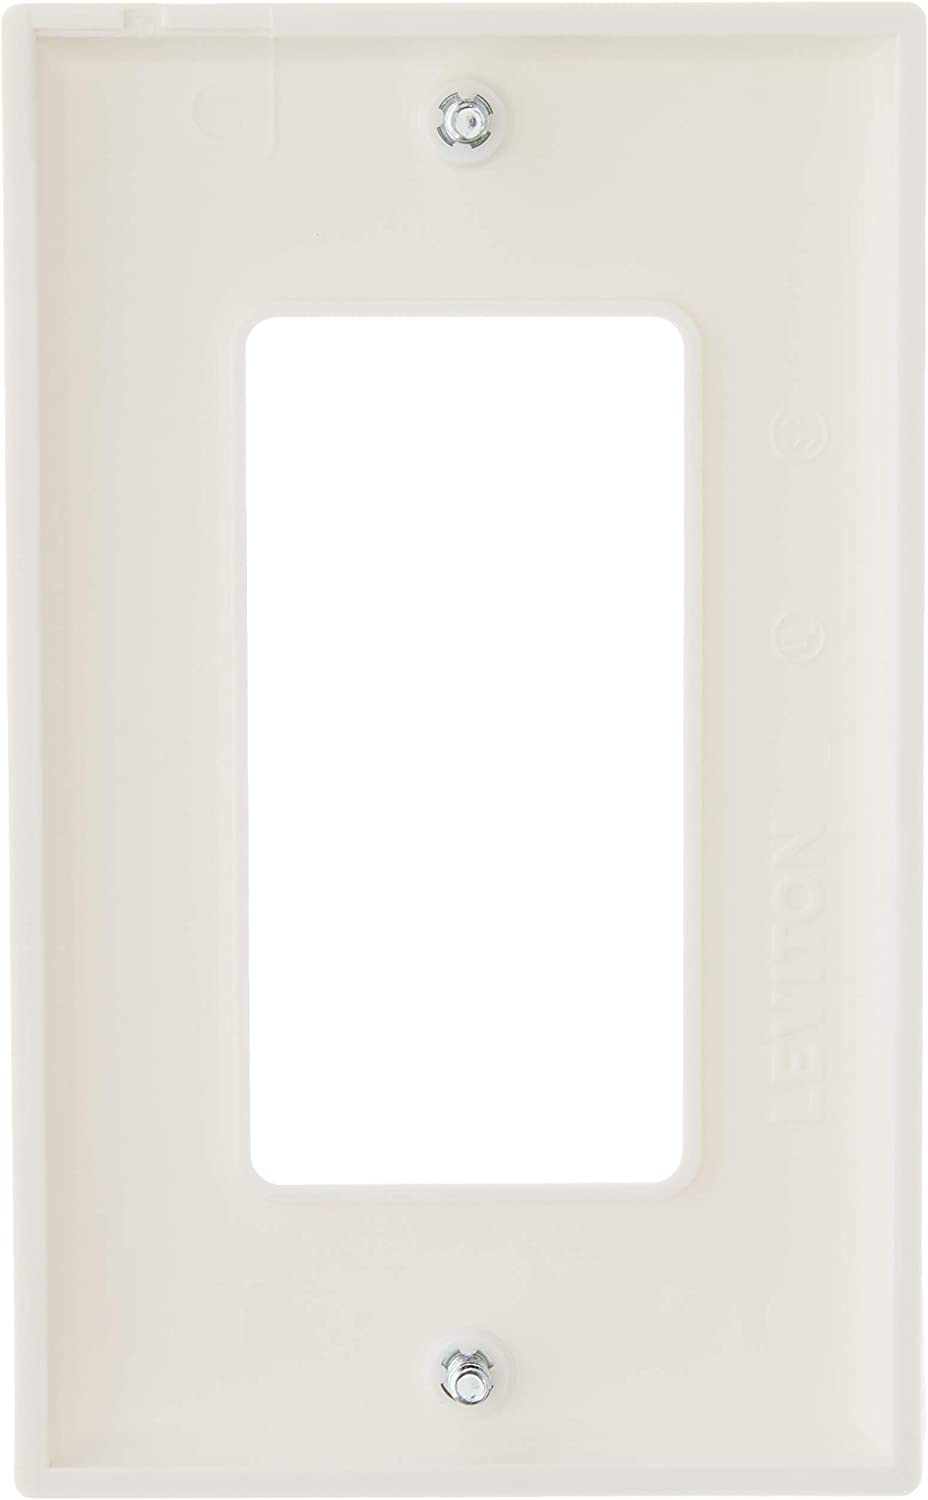 Leviton 122-80401-NW 1-Gang Decora/GFCI Device Wallplate, Standard Size, Thermoplastic Nylon, Device Mount, Small,White